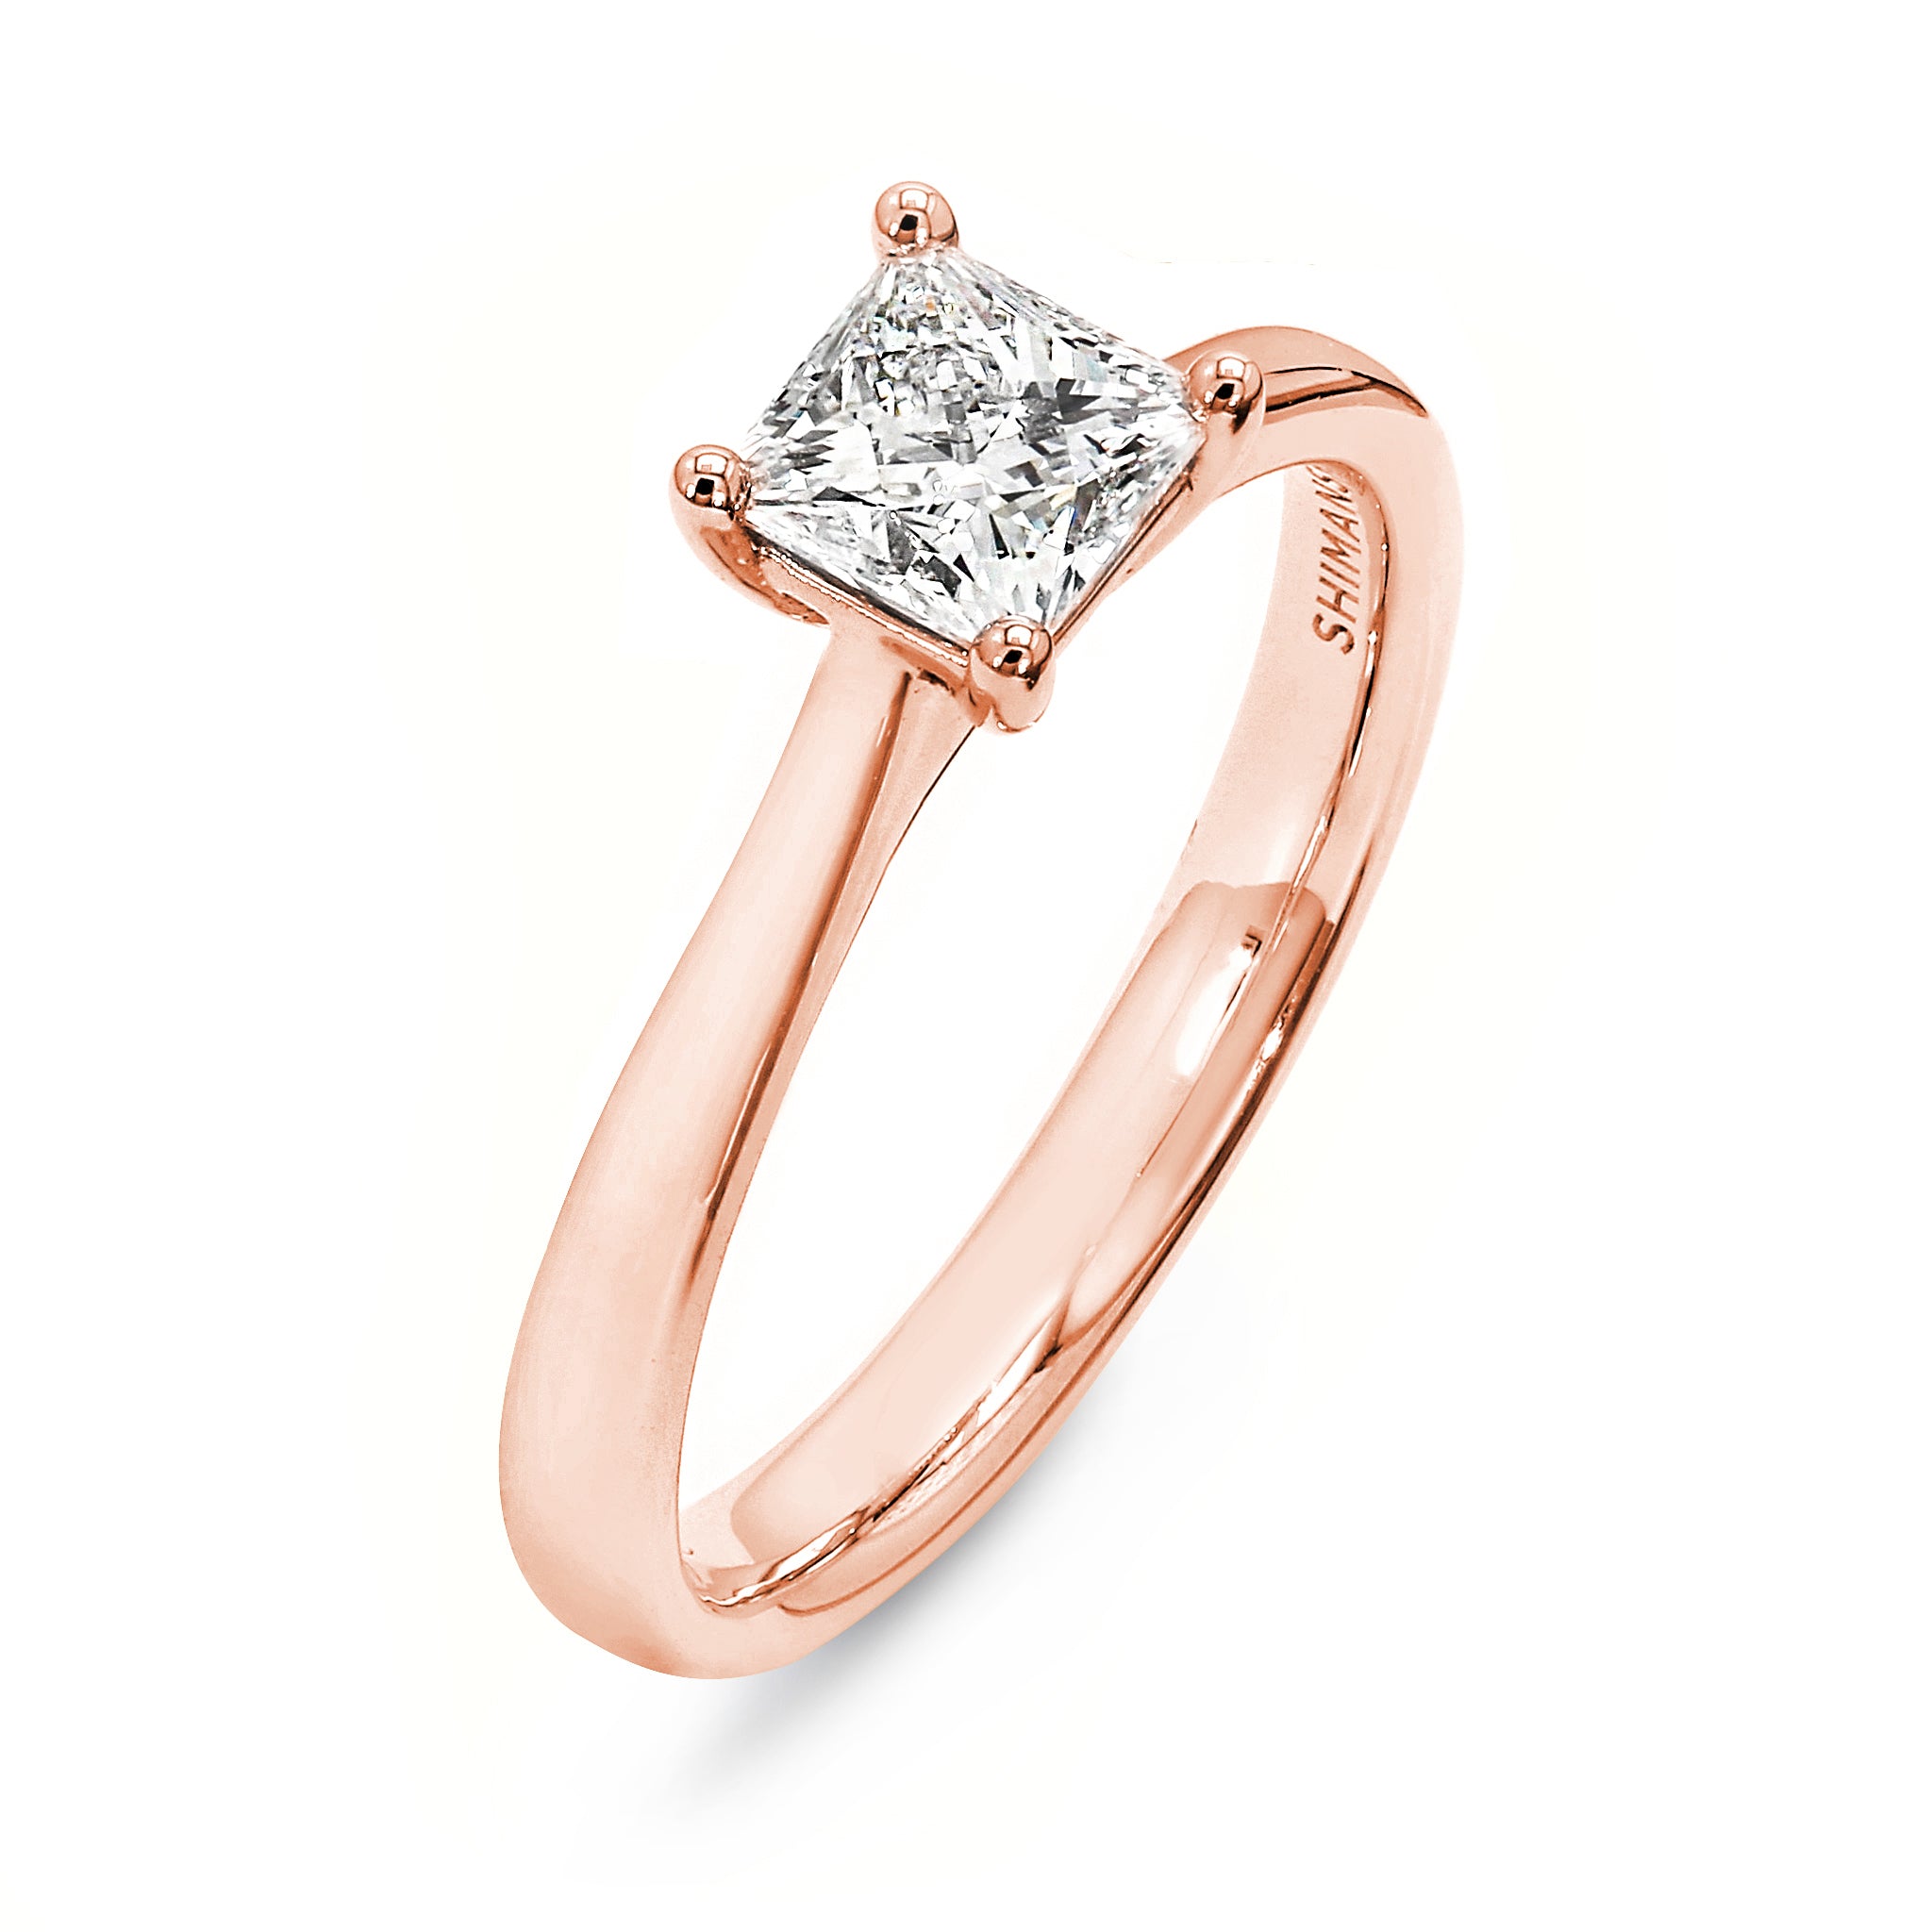 My Girl Solitaire 0.70 Carat Diamond Engagement Ring  | 18K Rose Gold - SHIMANSKY.CO.ZA